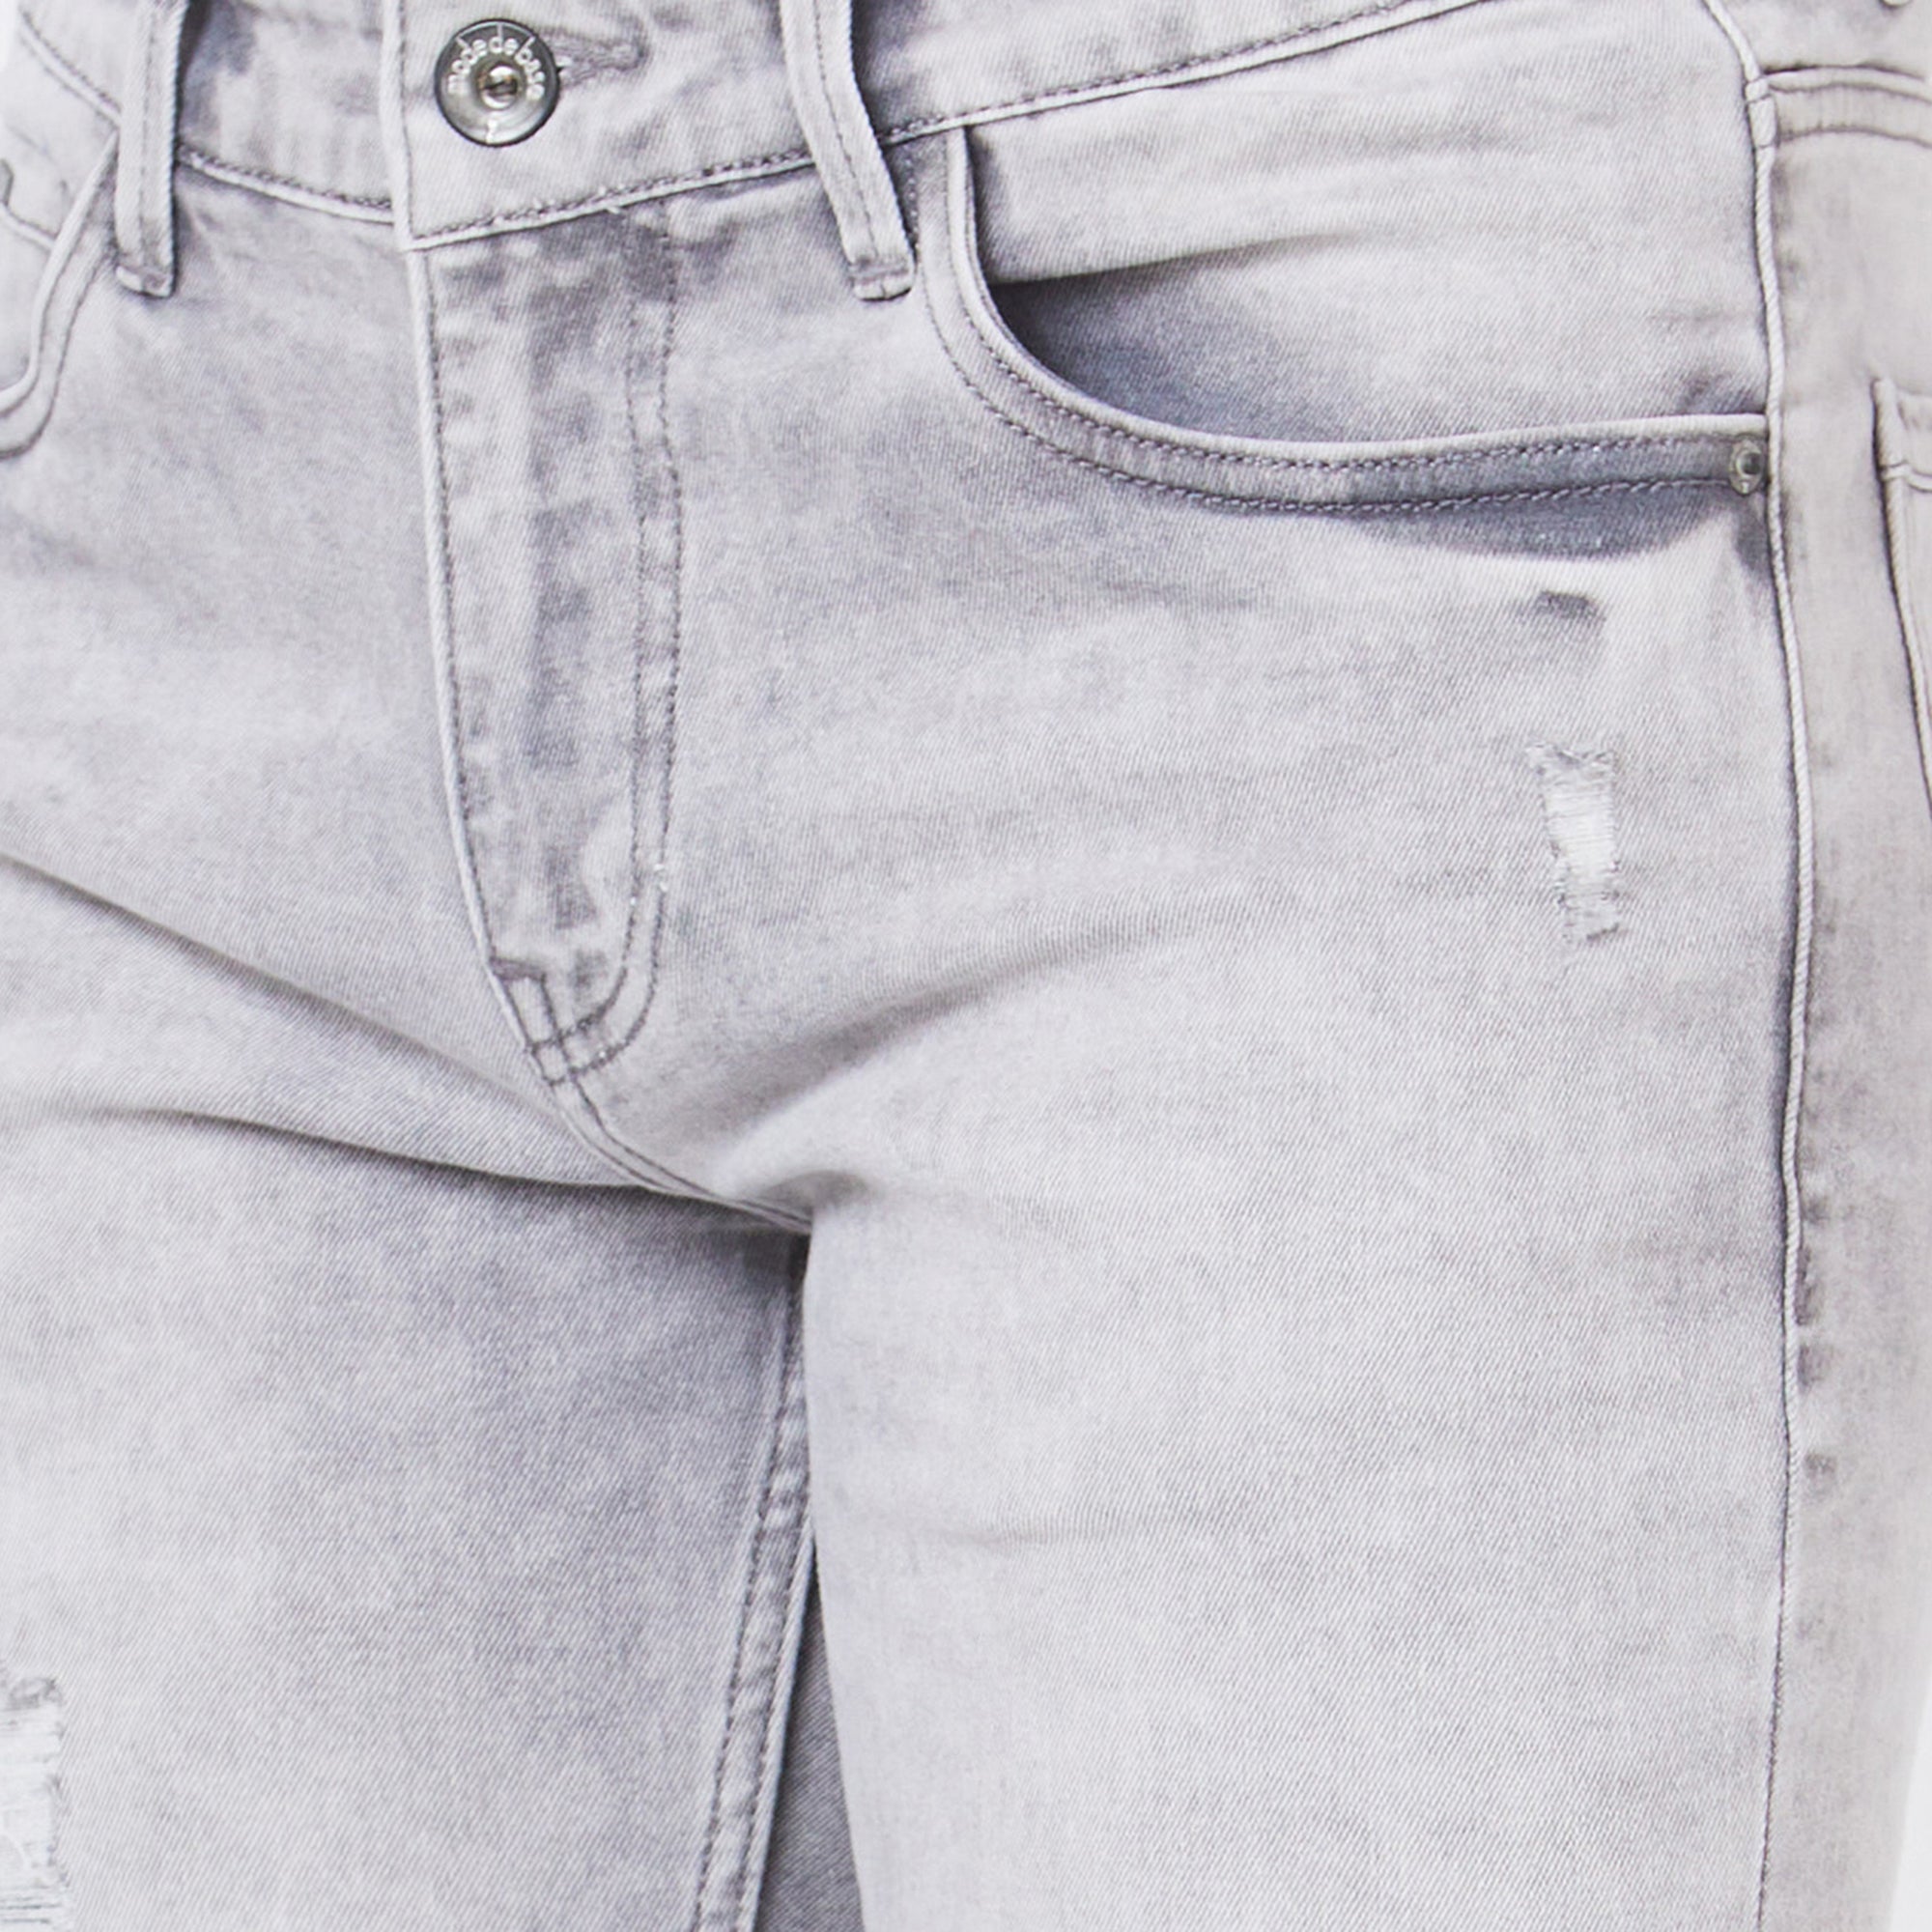 Men's Slim Fit Straight Casual Denim Boot-cut Jeans